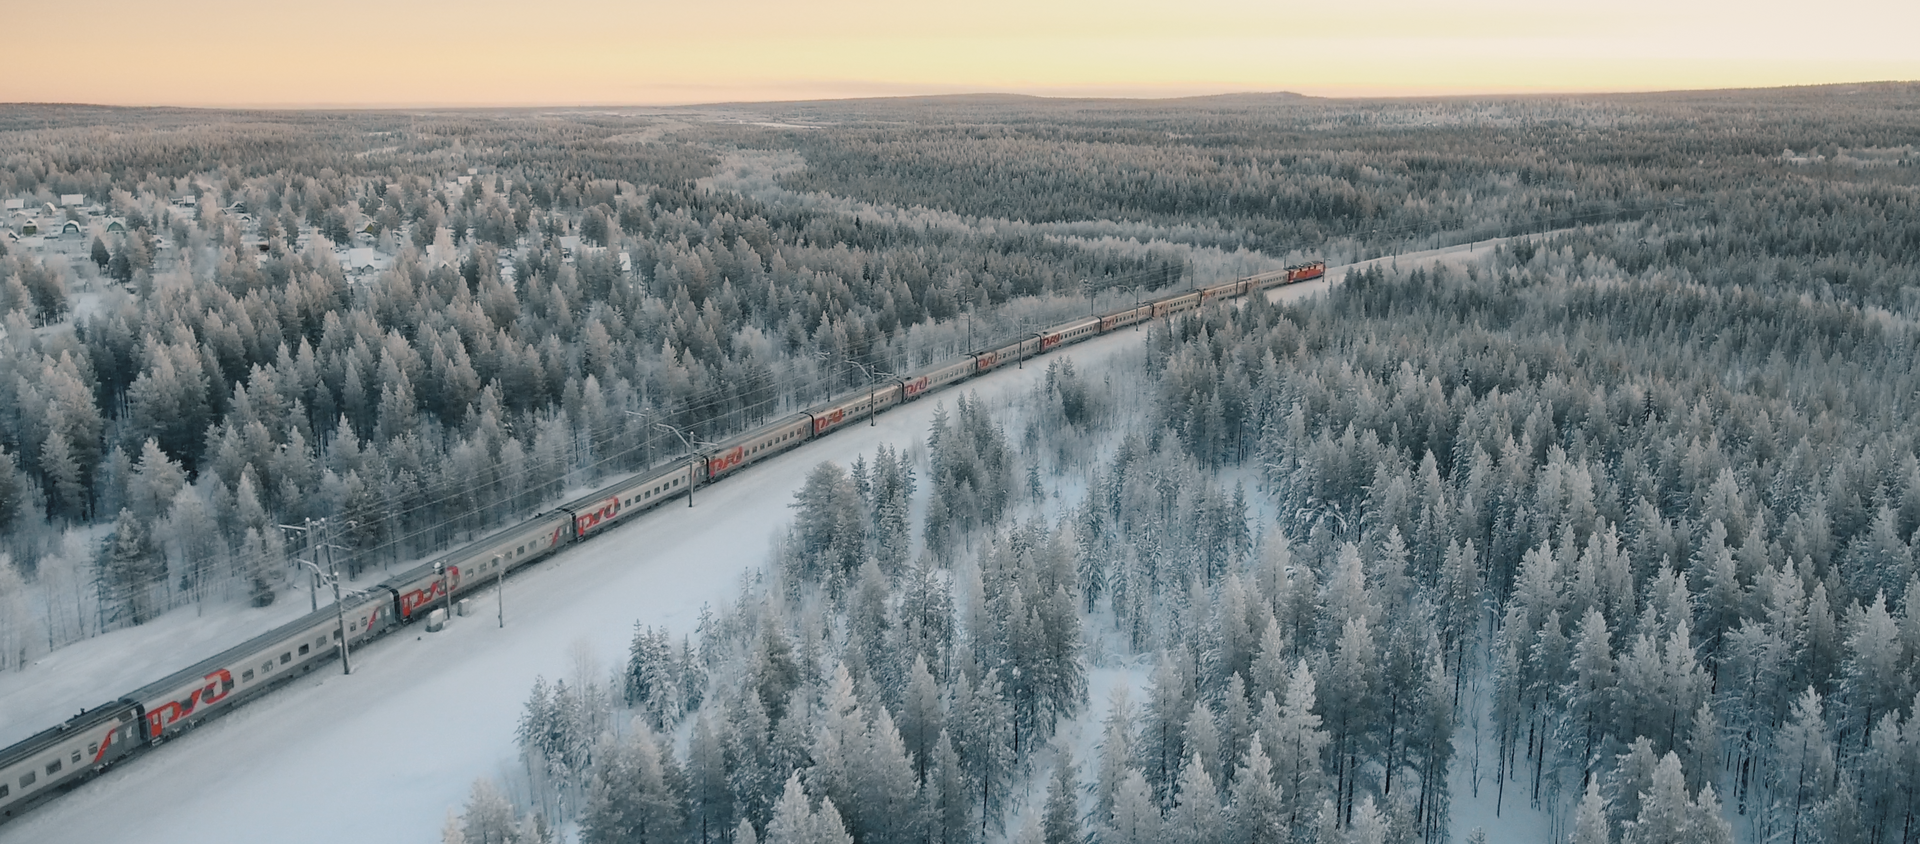 Tren ruso en invierno - Sputnik Mundo, 1920, 06.01.2019